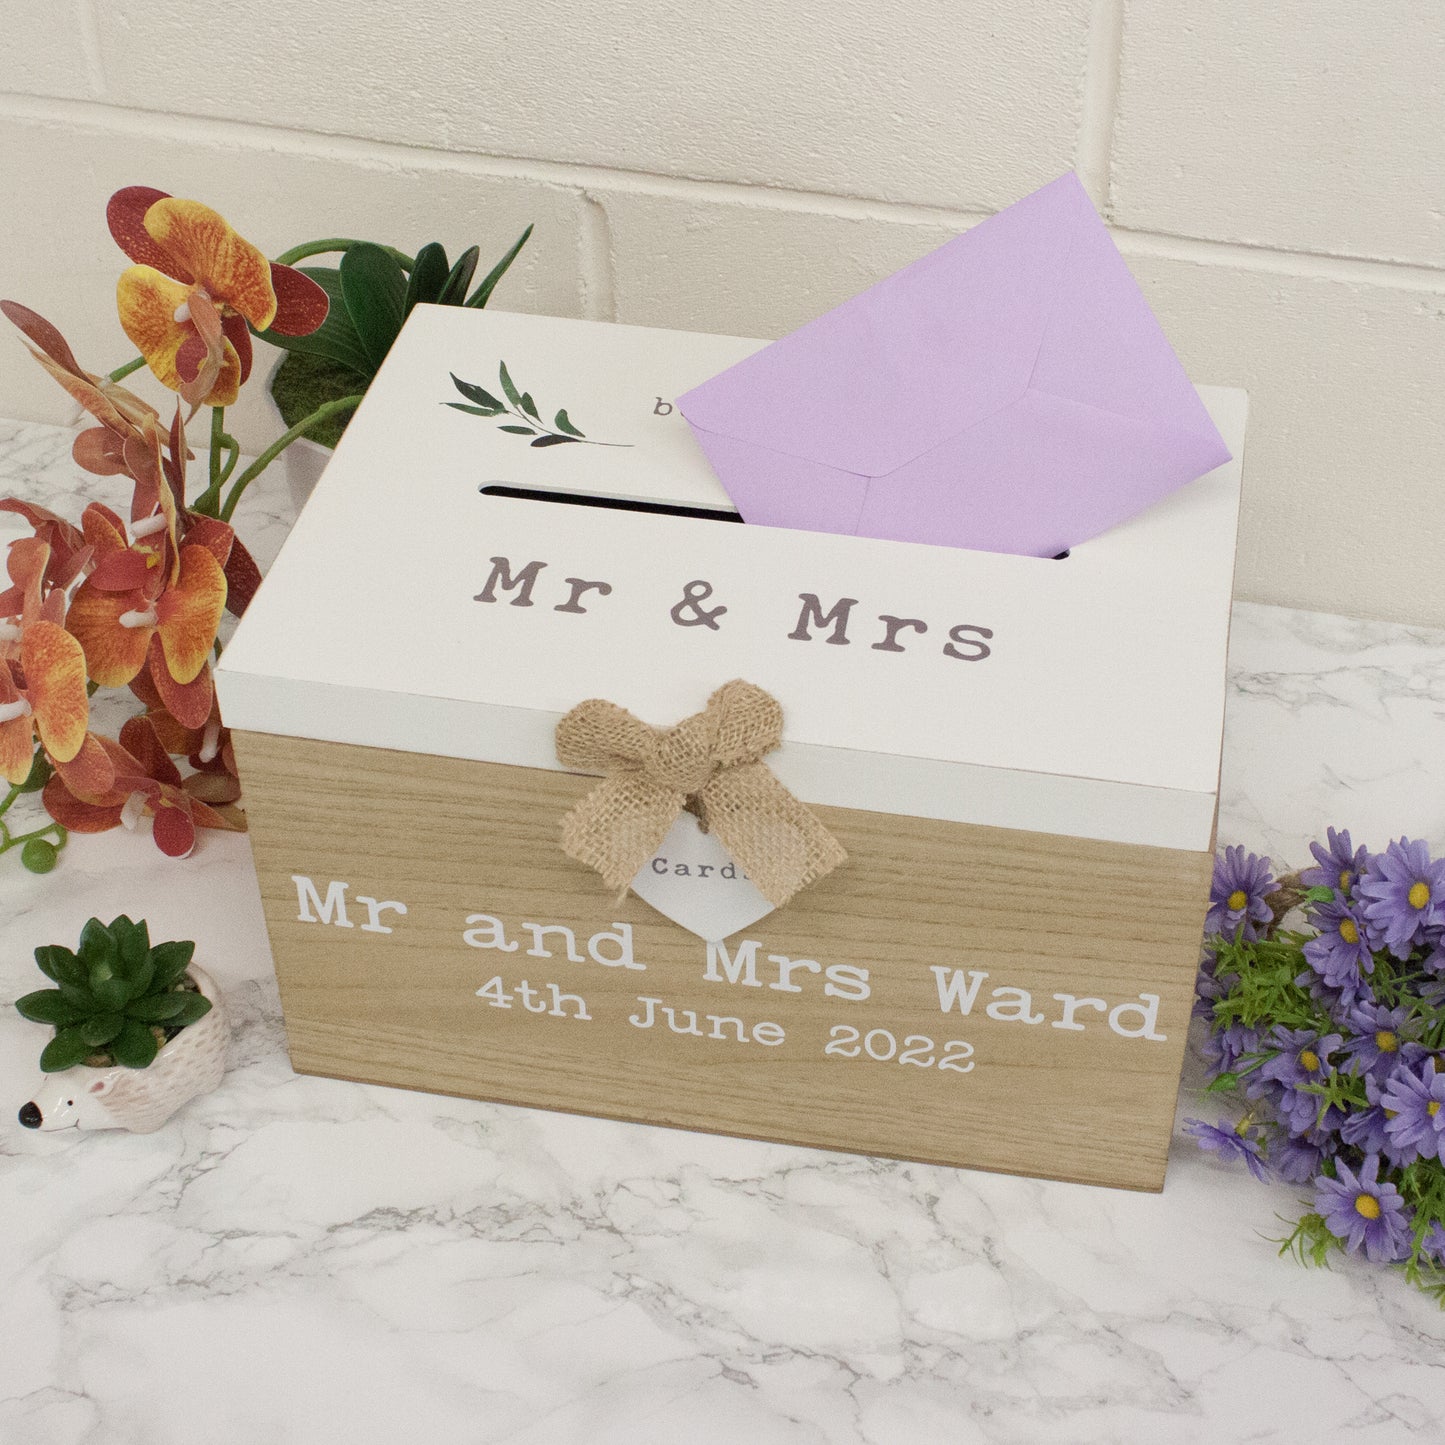 Personalised Wedding Card White & Wooden Memory Box  - Always Looking Good -   